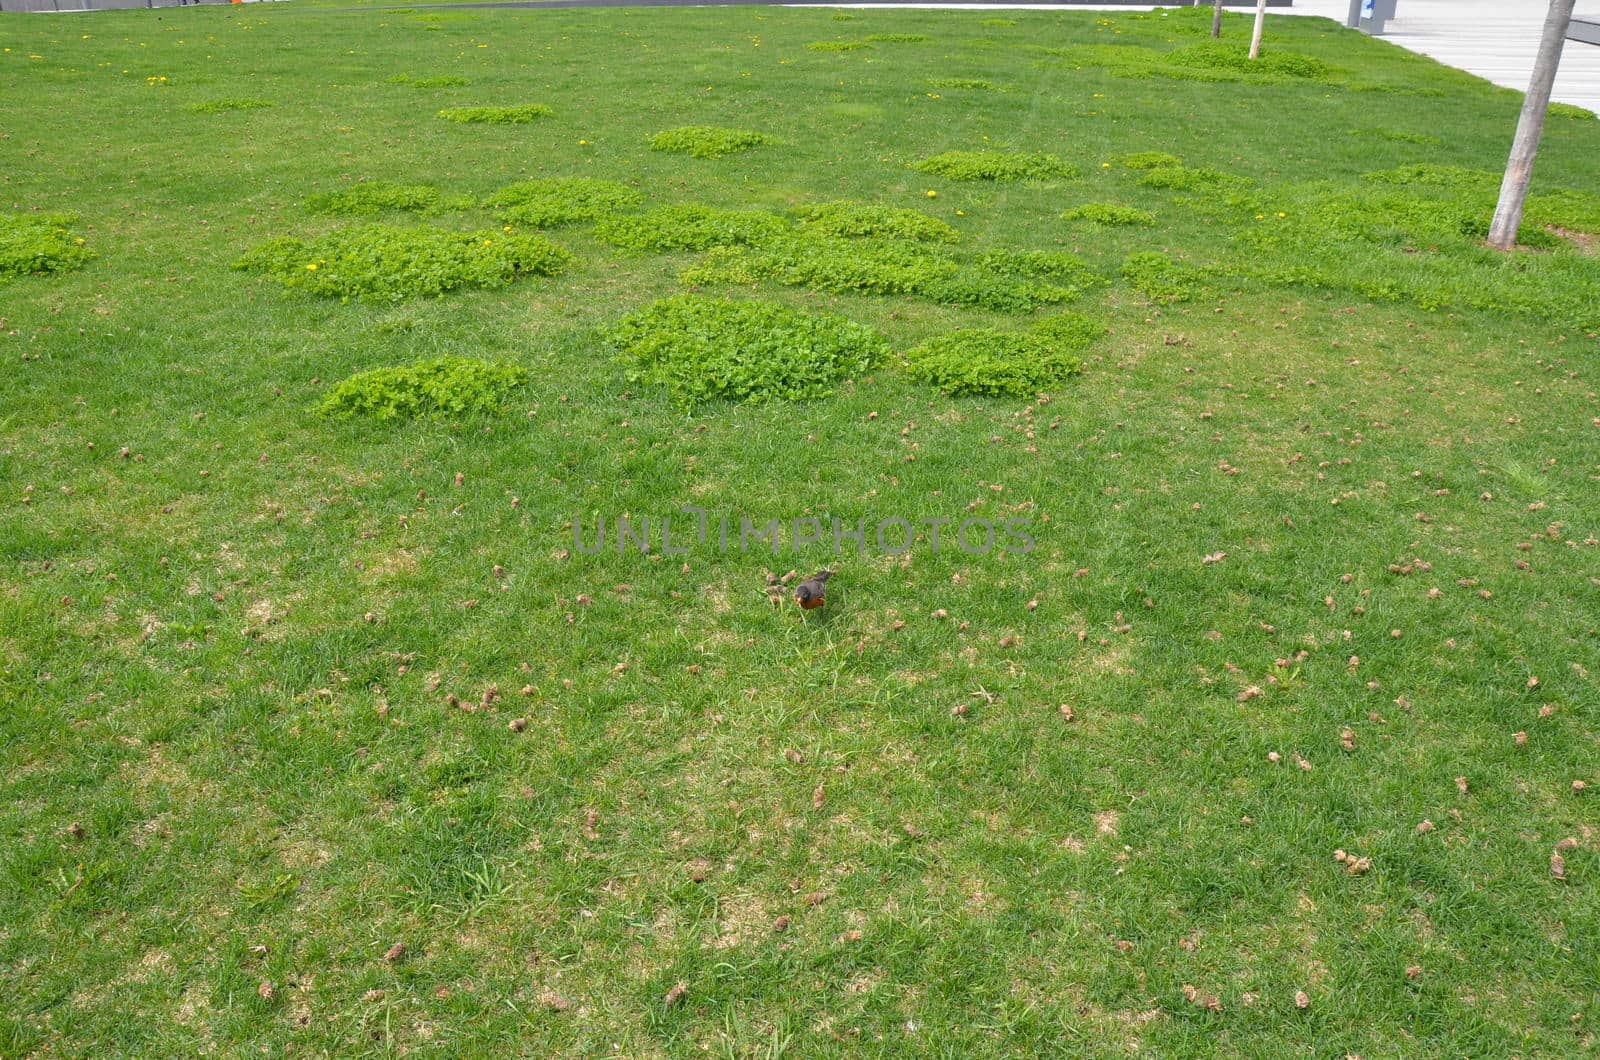 orange oriole bird in green grass or lawn or yard